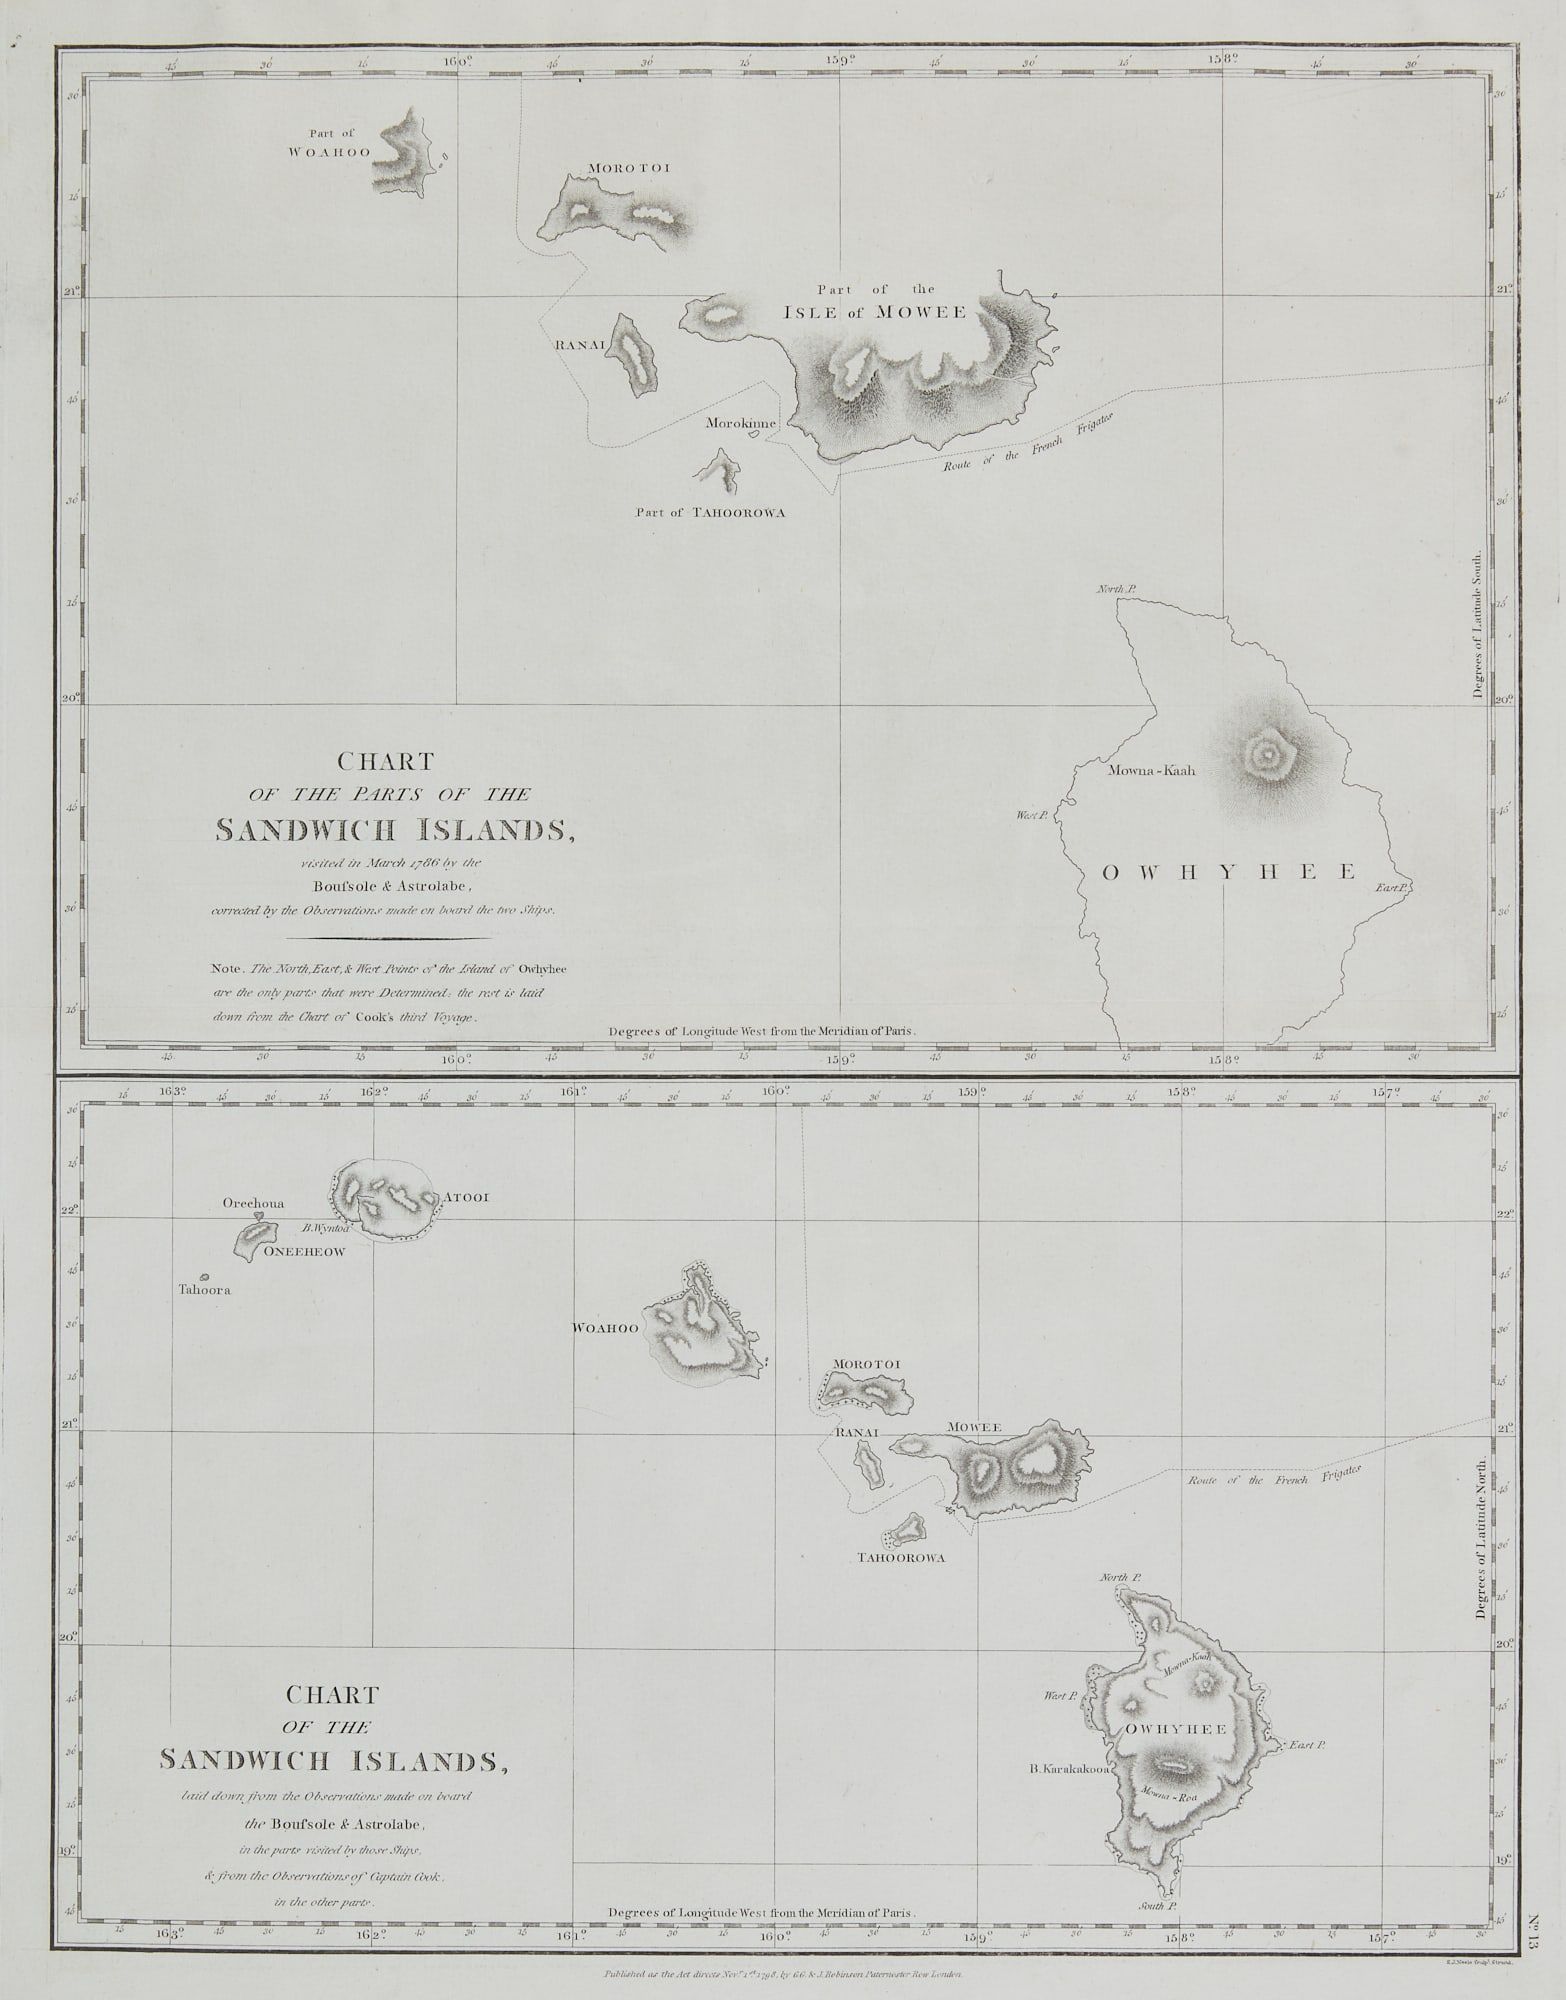 A CHART OF THE SANDWICH ISLANDSA 2fb3b3b